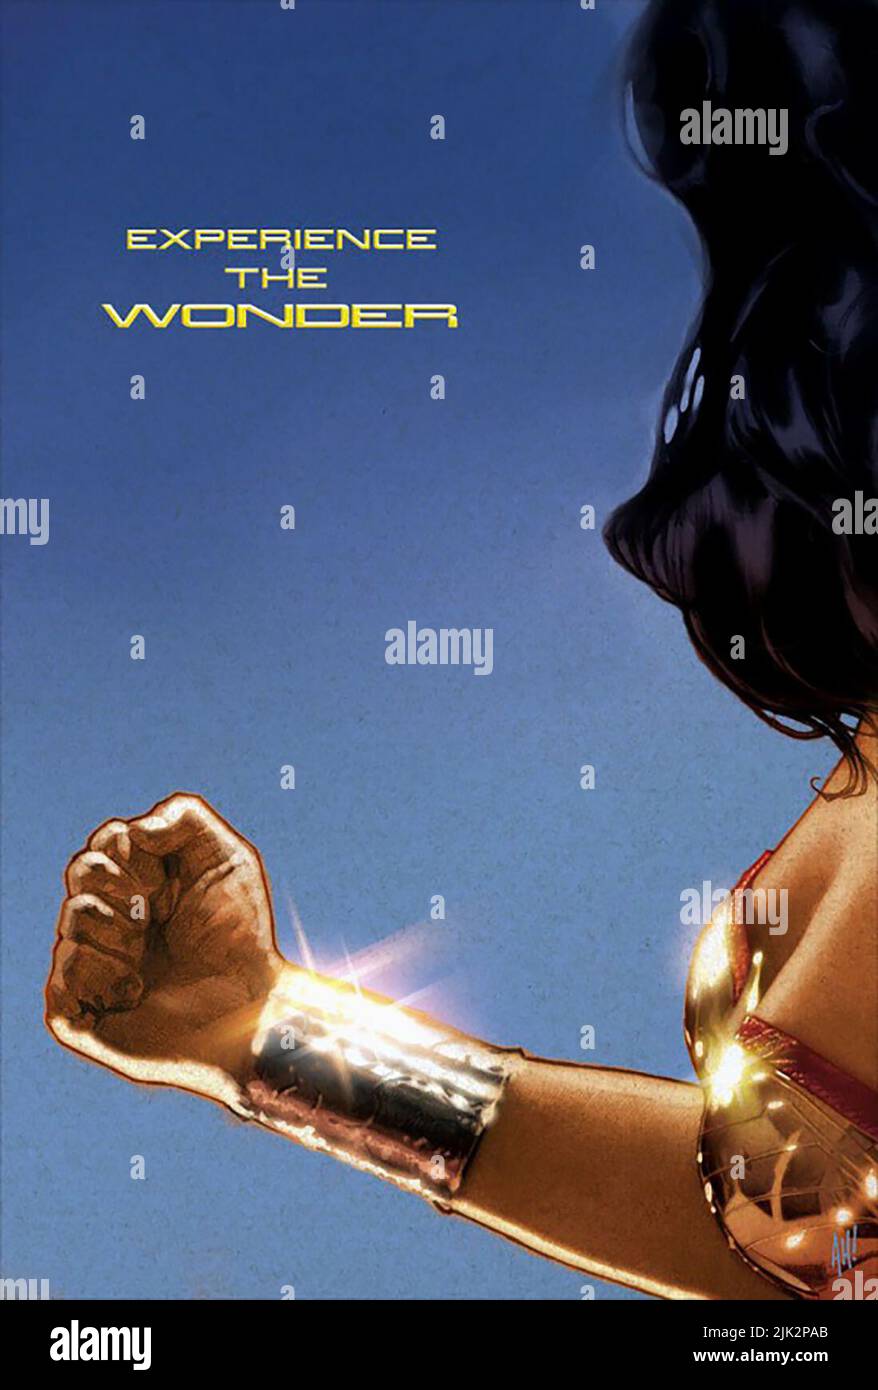 wonder woman movie poster